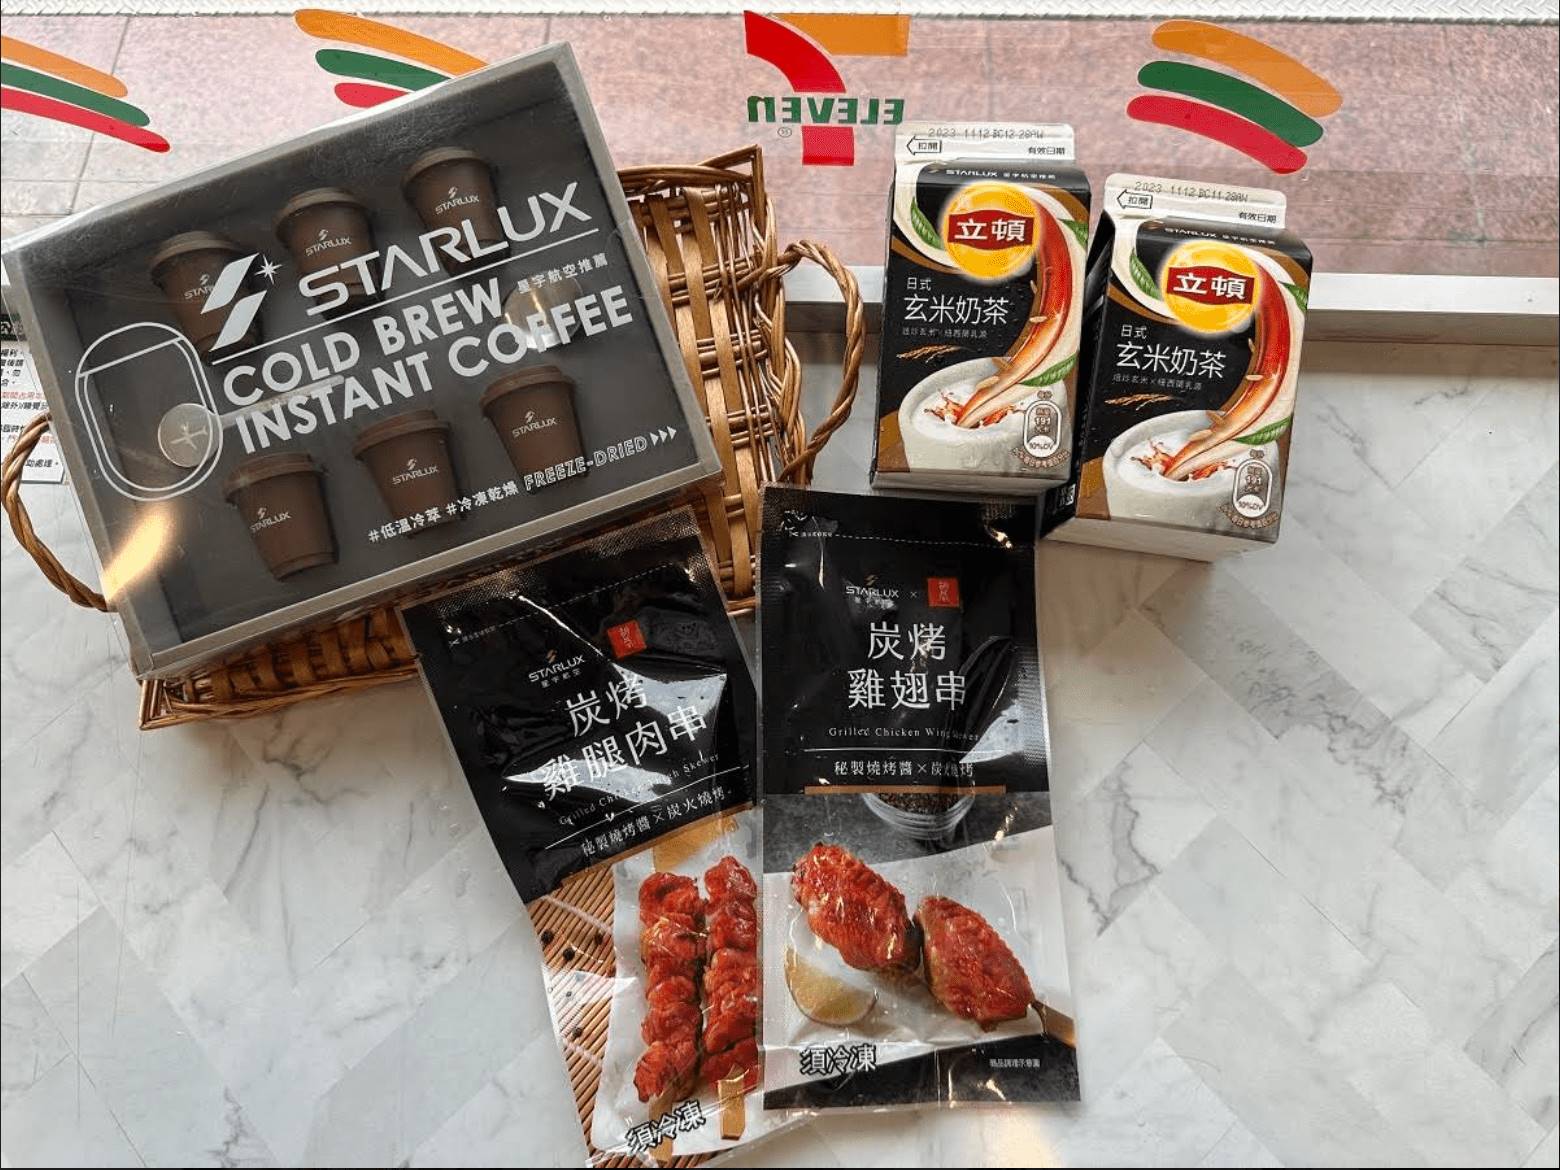 7-ELEVEN聯手星宇航空推出「醬燒雞翅串」、「雞腿肉串燒」、「星宇玄米奶茶」、「星宇航空凍乾冷萃咖啡禮盒組」。